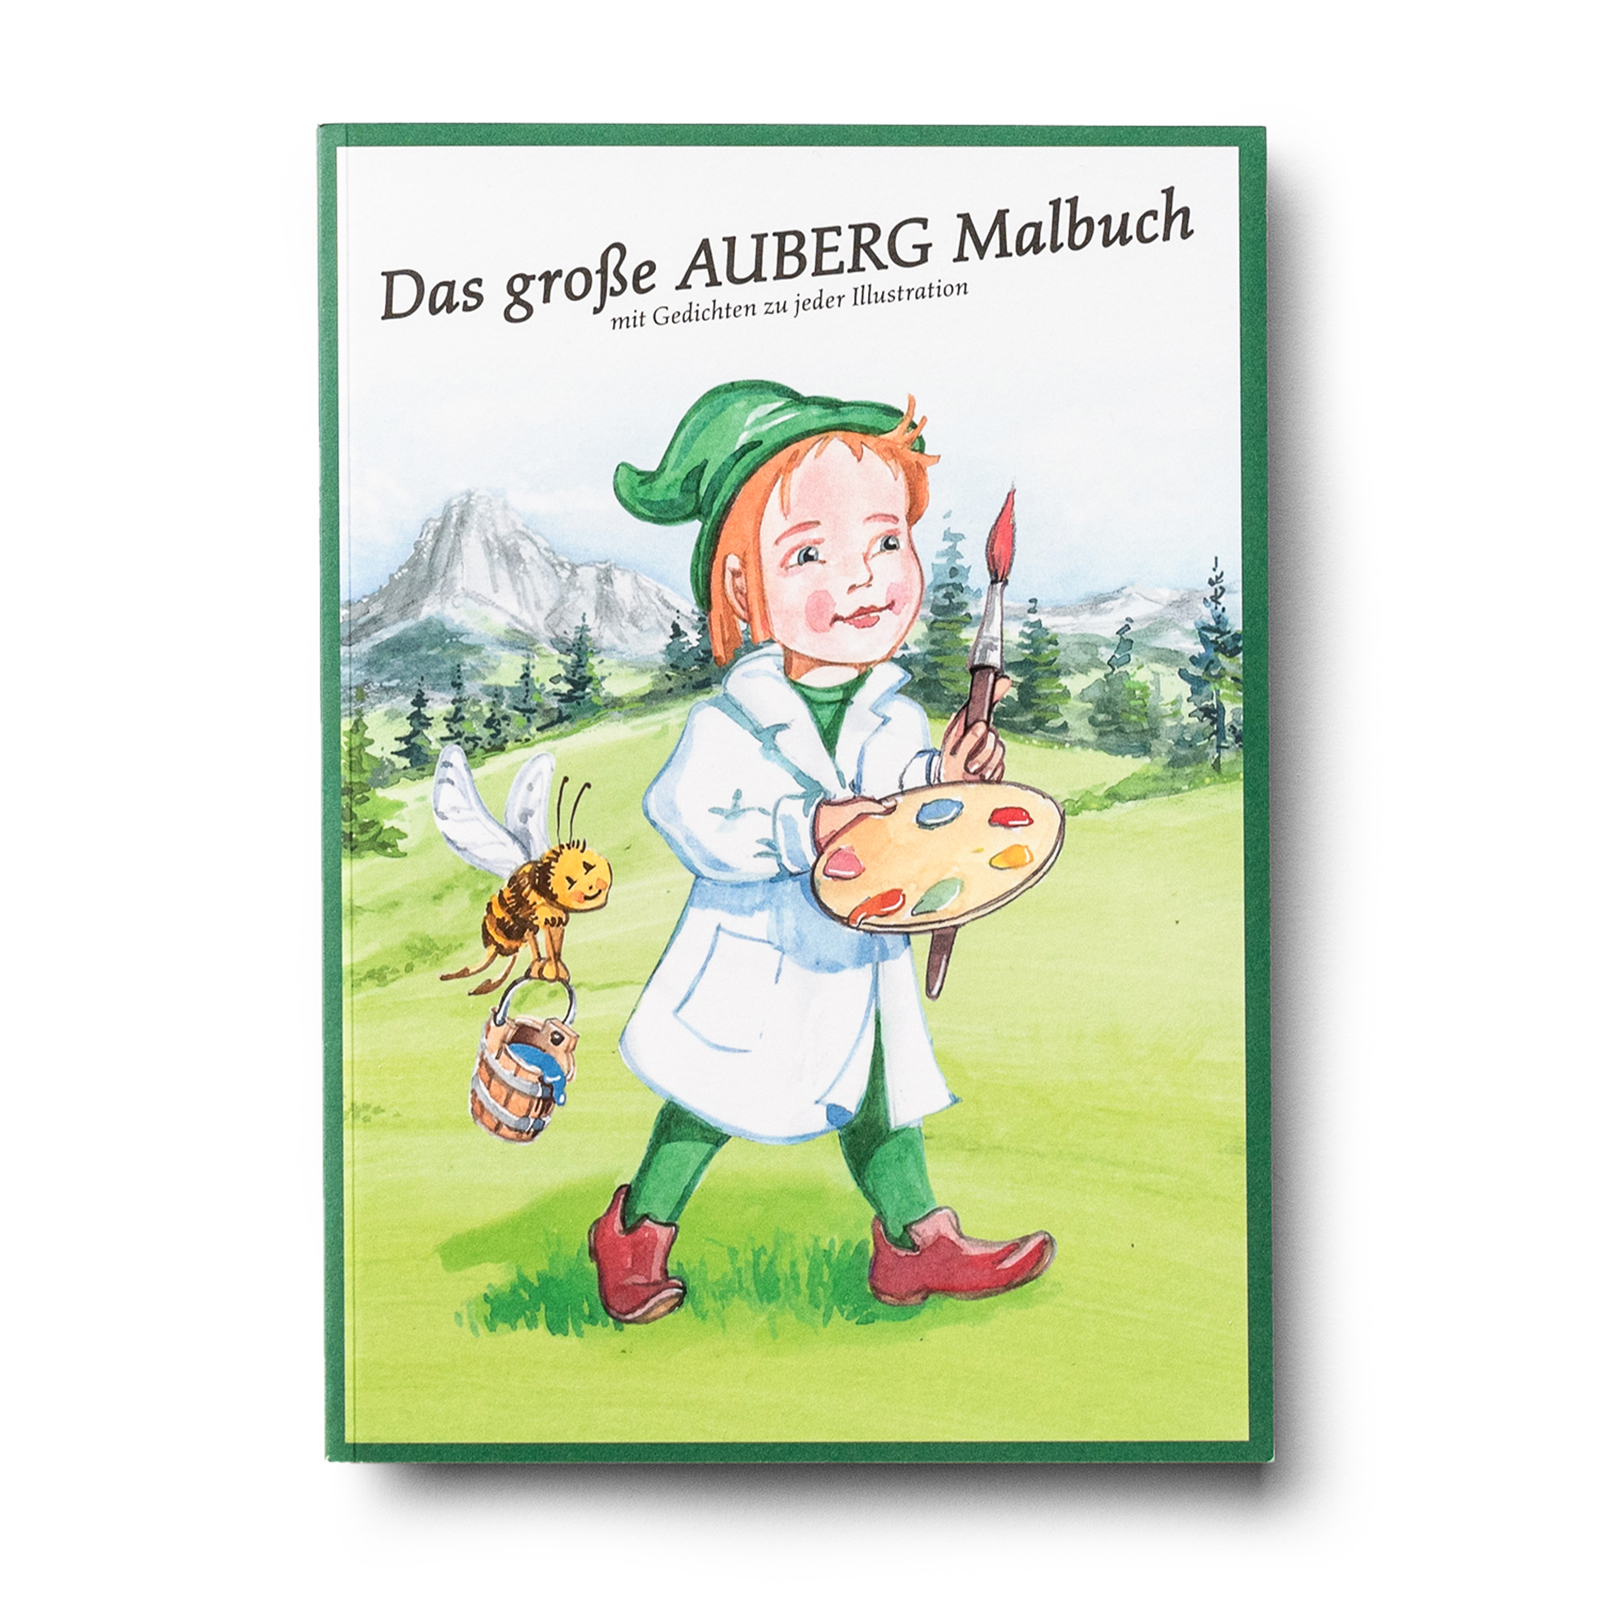 AUBERG Malbuch